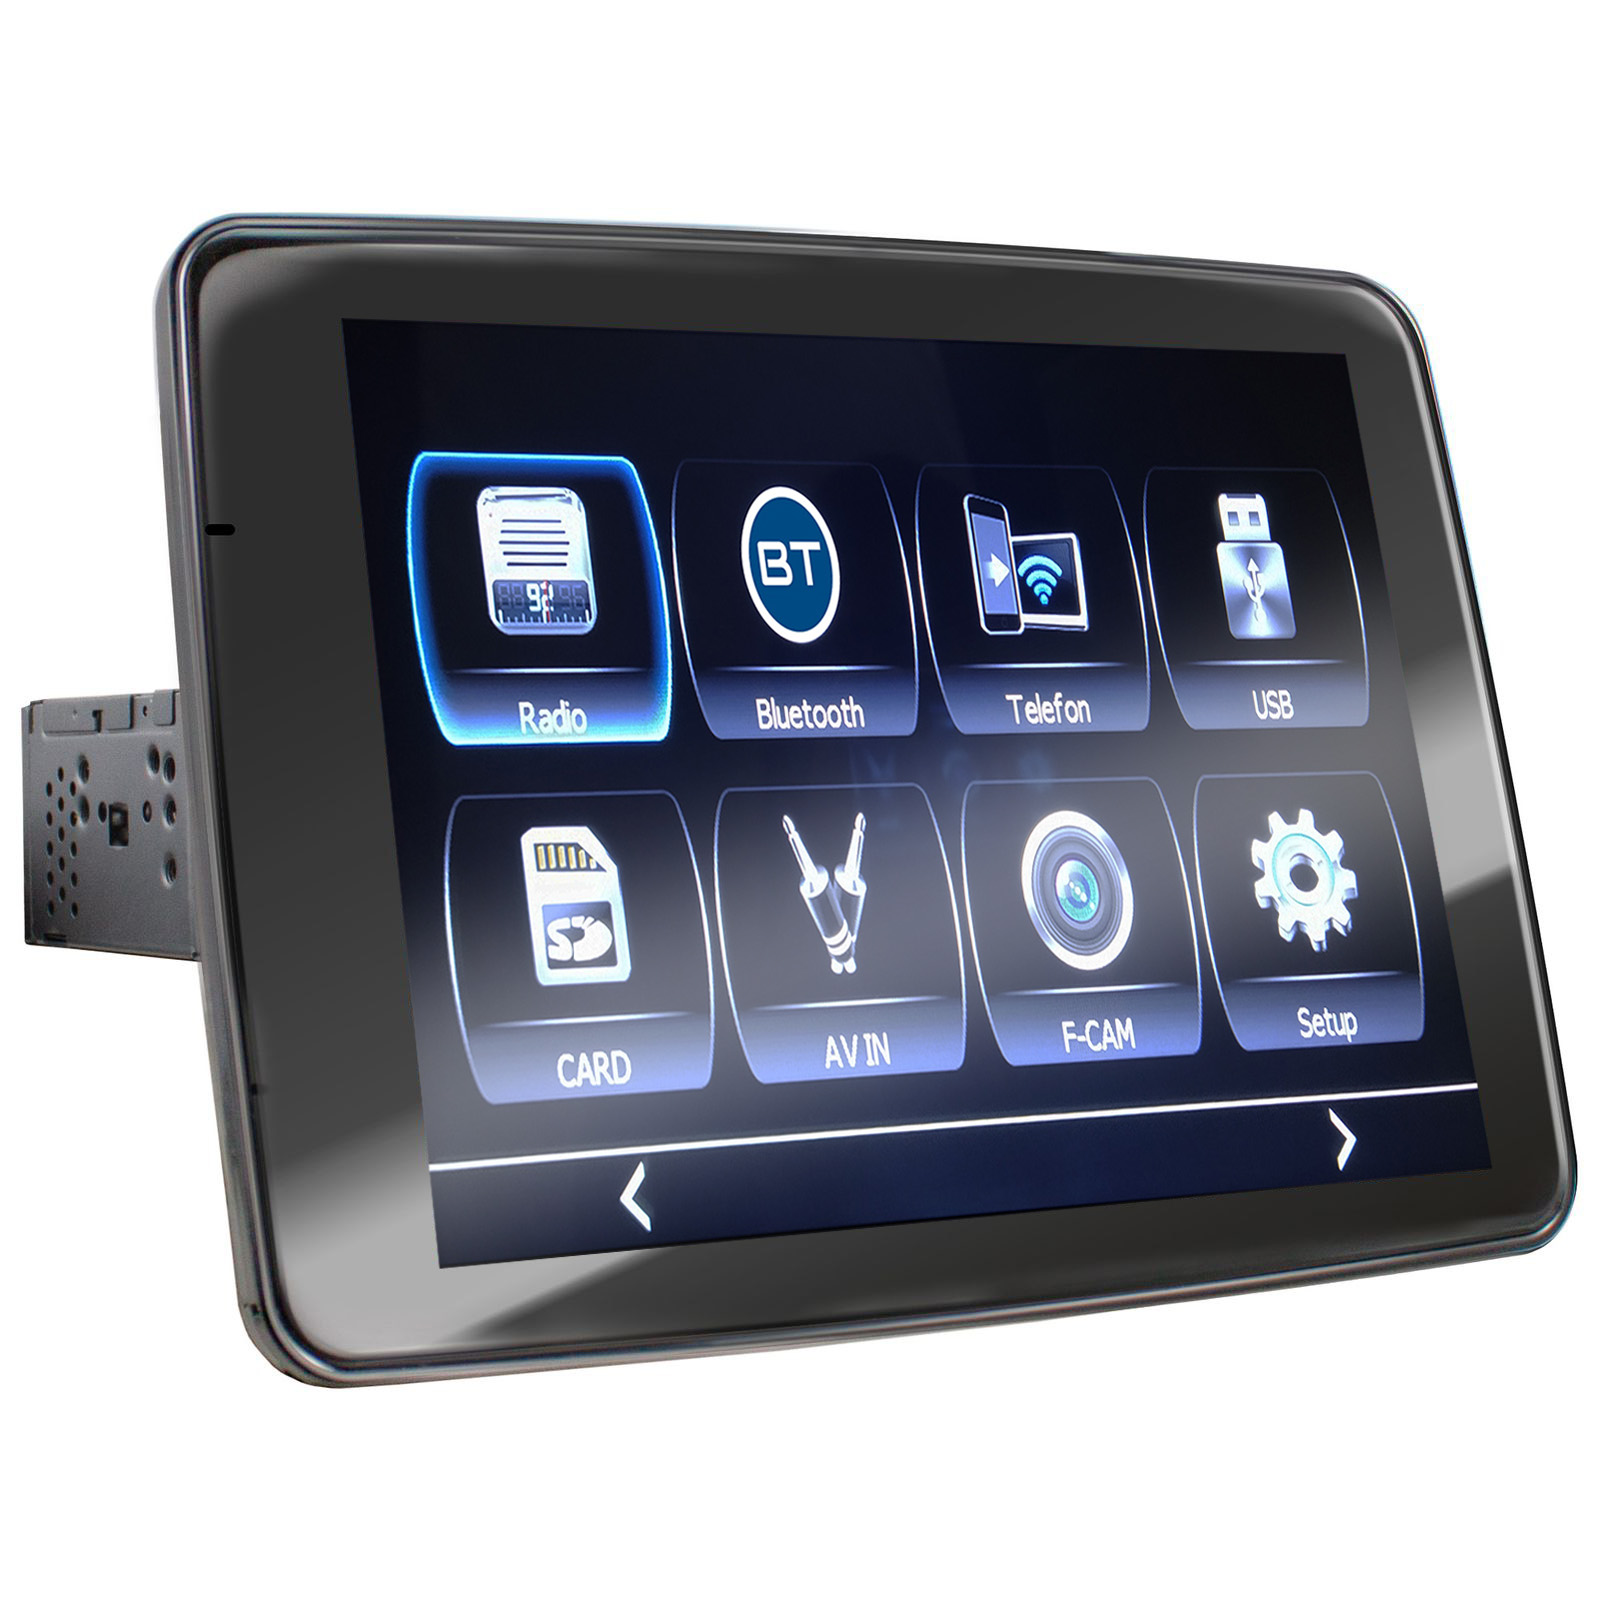 XOMAX XM-V779 Autoradio mit 7 Zoll Touchscreen Bildschirm (kapazitiv),  Mirrorlink, Bluetooth, SD, USB, 1 DIN